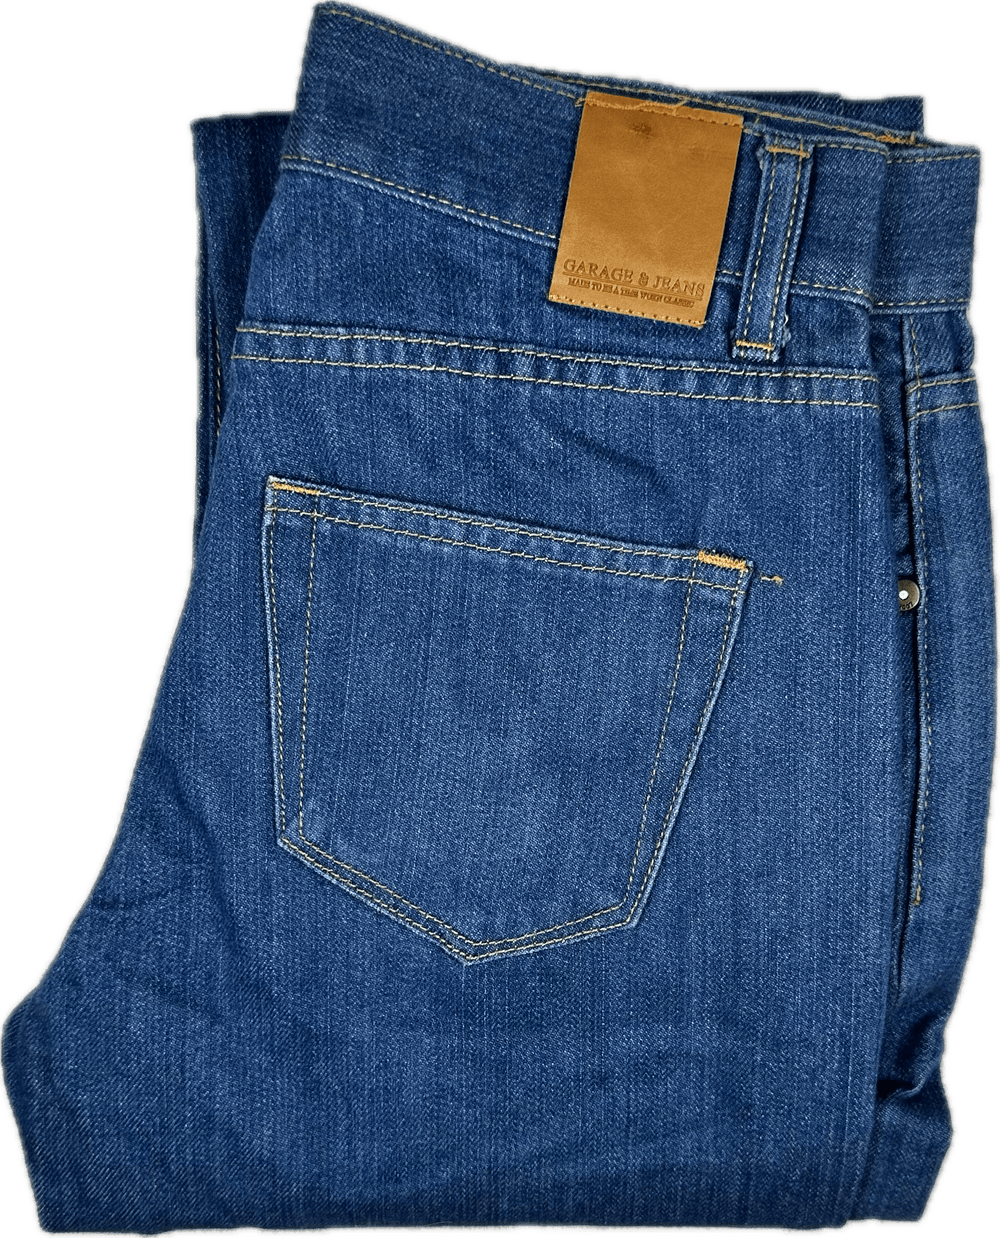 Garage Jeans Selvedge Slim Fit Jeans- Size 29 - Jean Pool